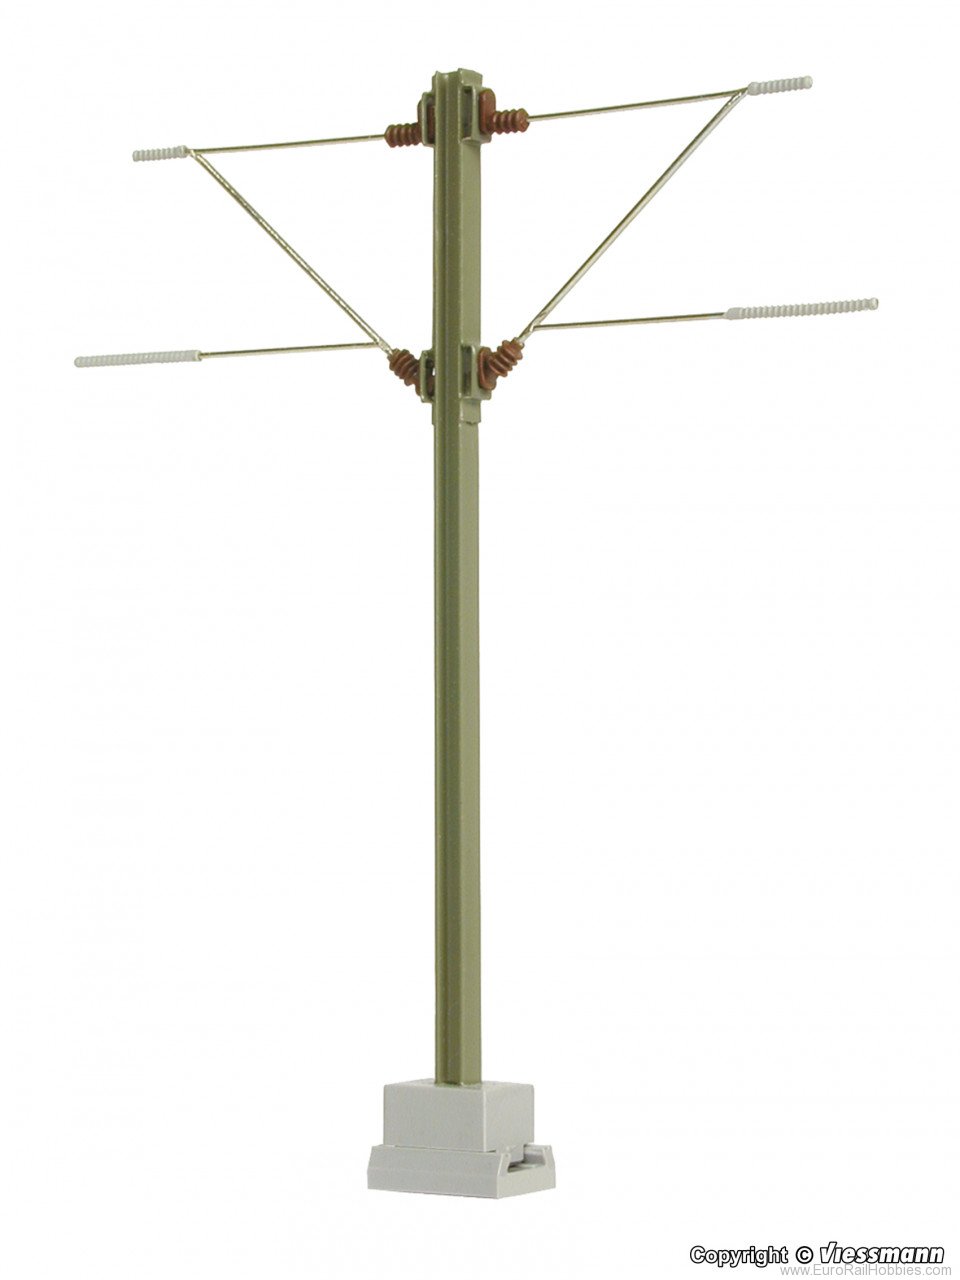 Viessmann 4124 HO H-Profil middle mast